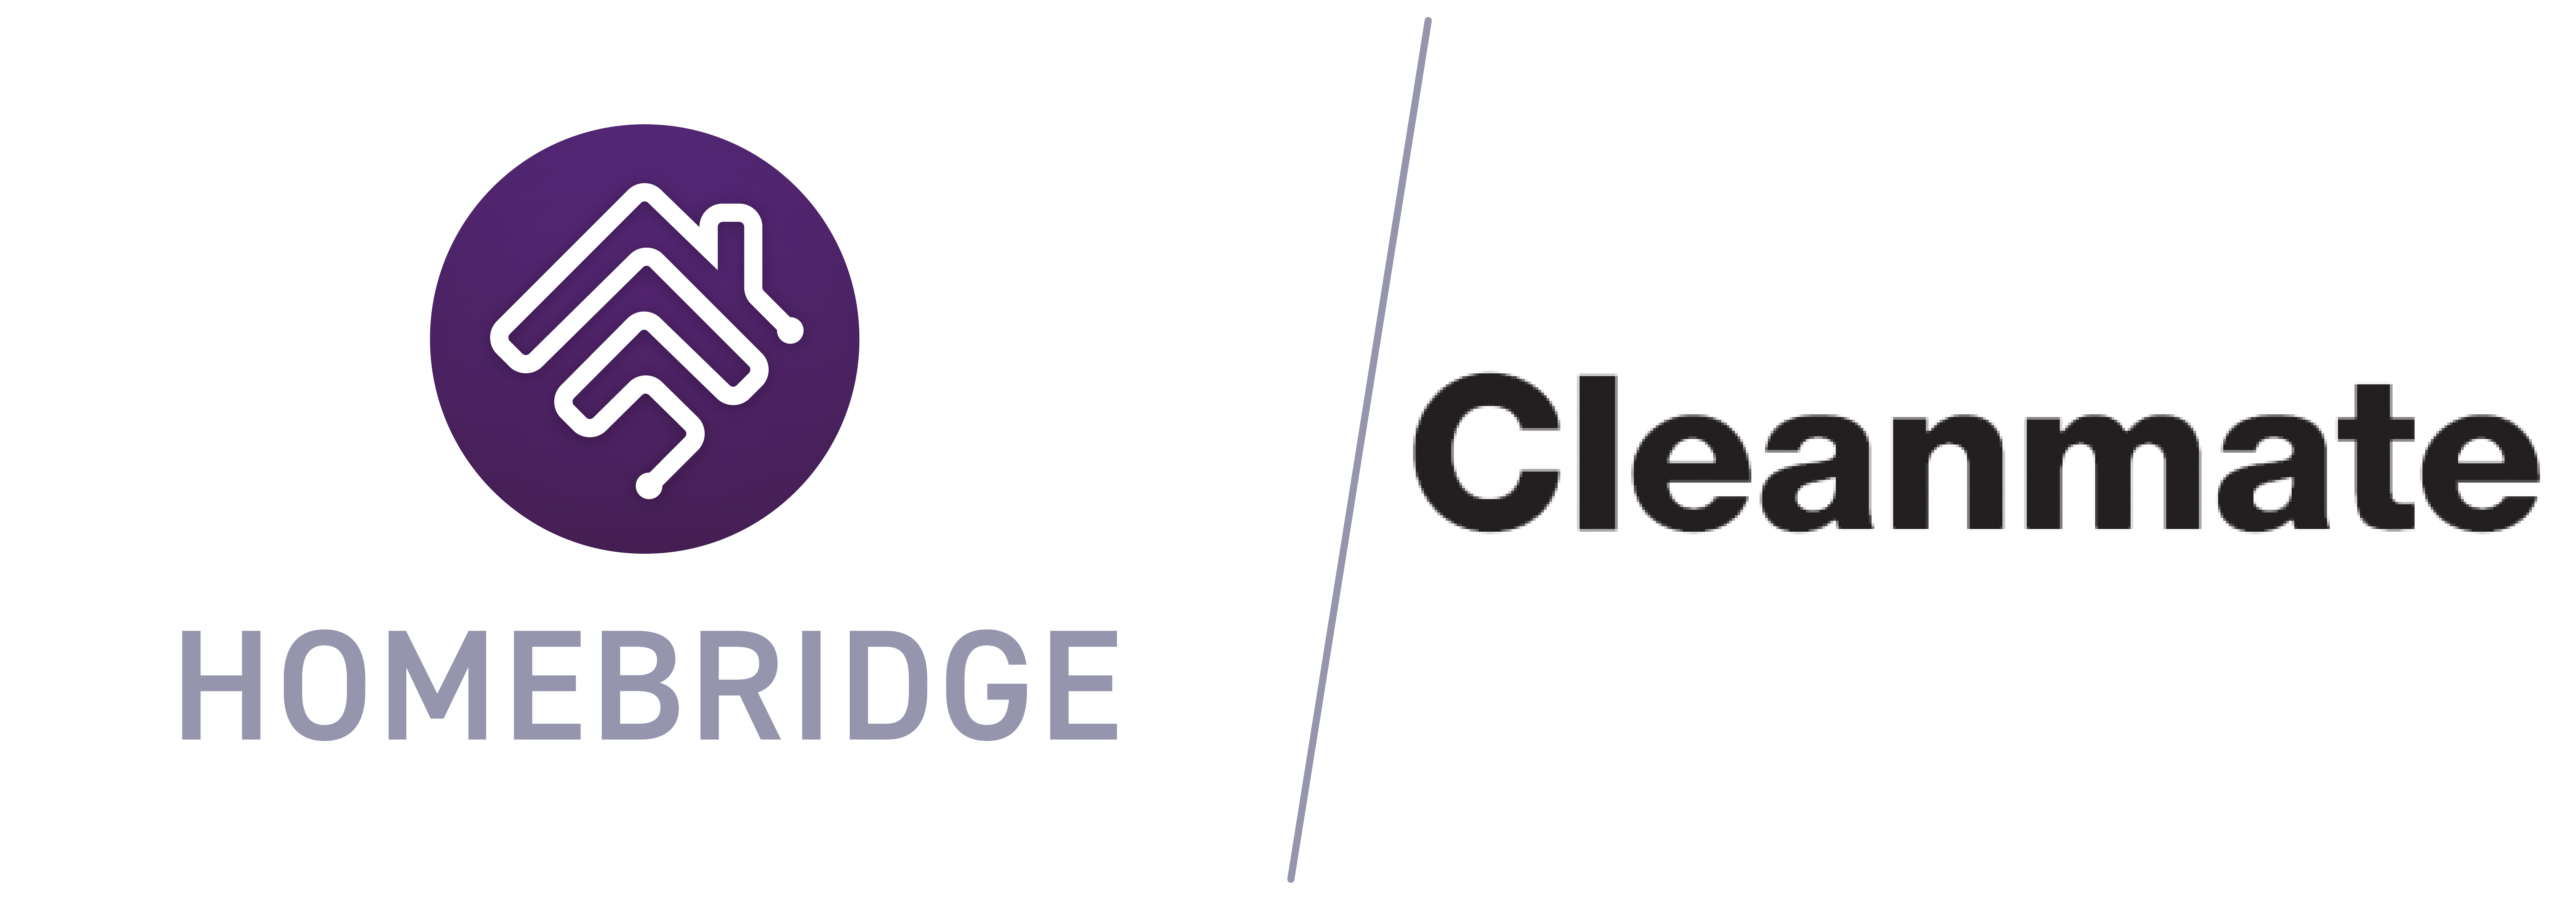 homebridge-cleanmate-logo.png